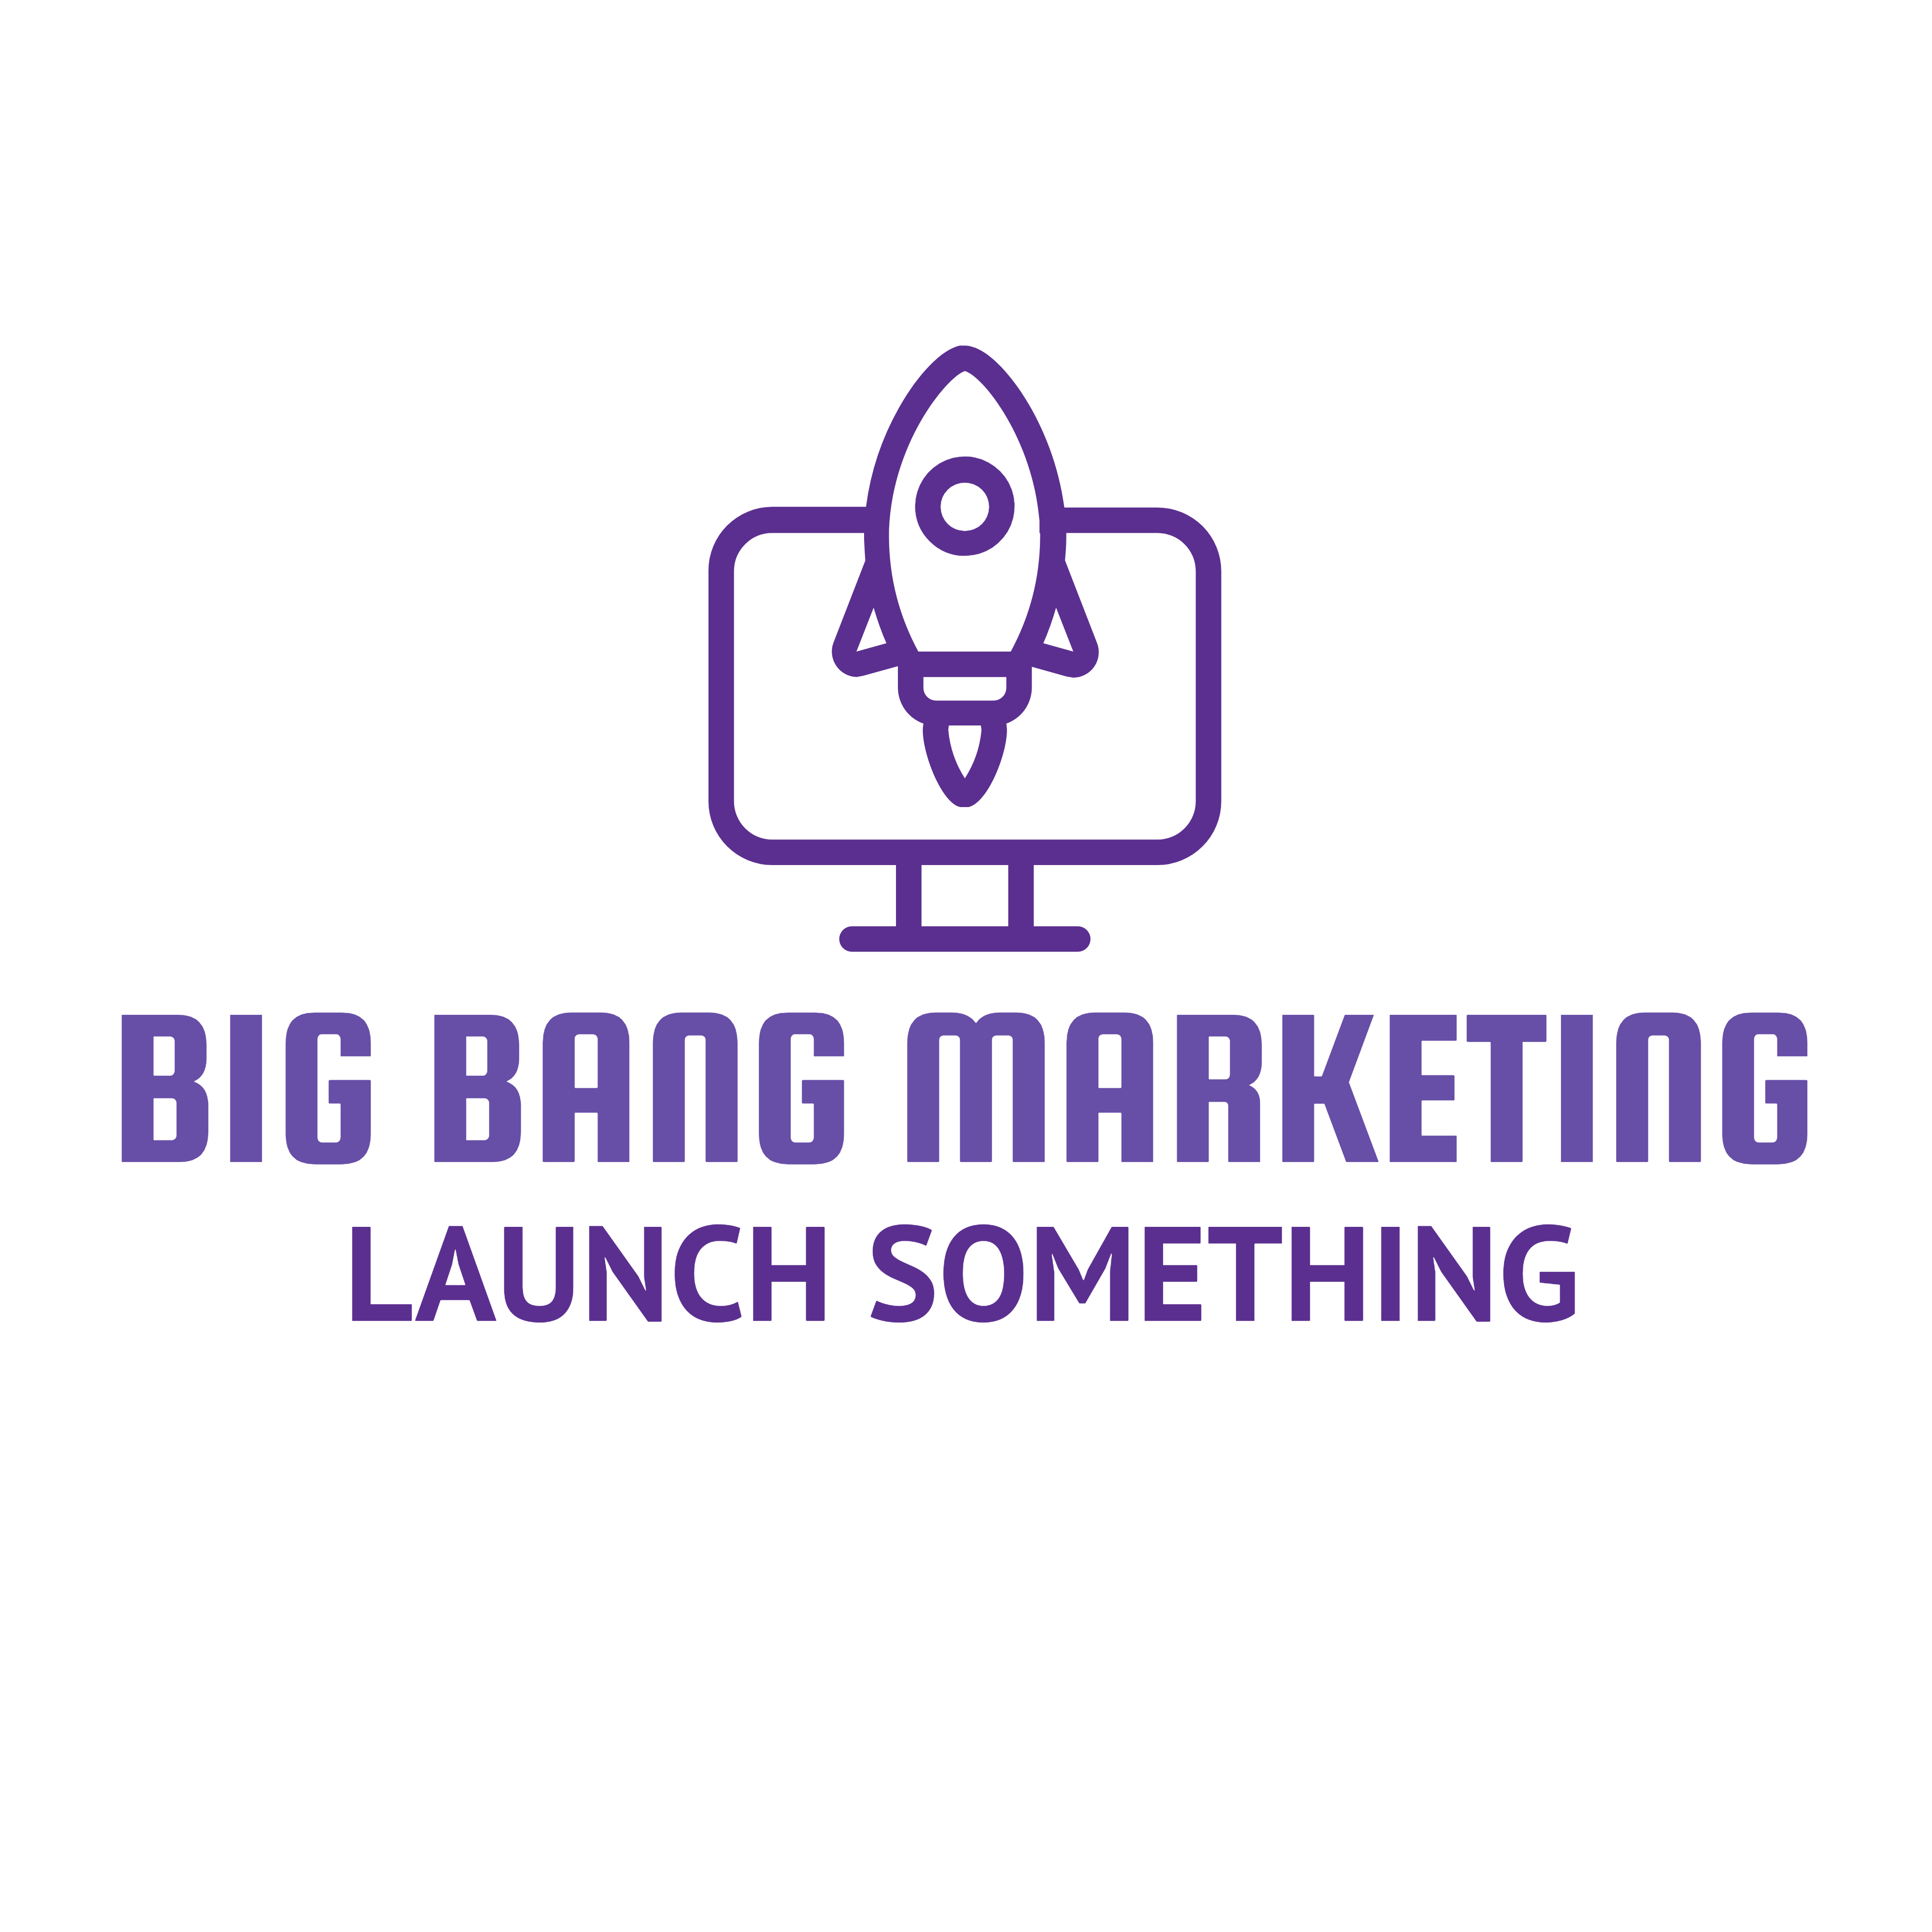 Top Online Marketing Firm Logo: Big Bang Marketing